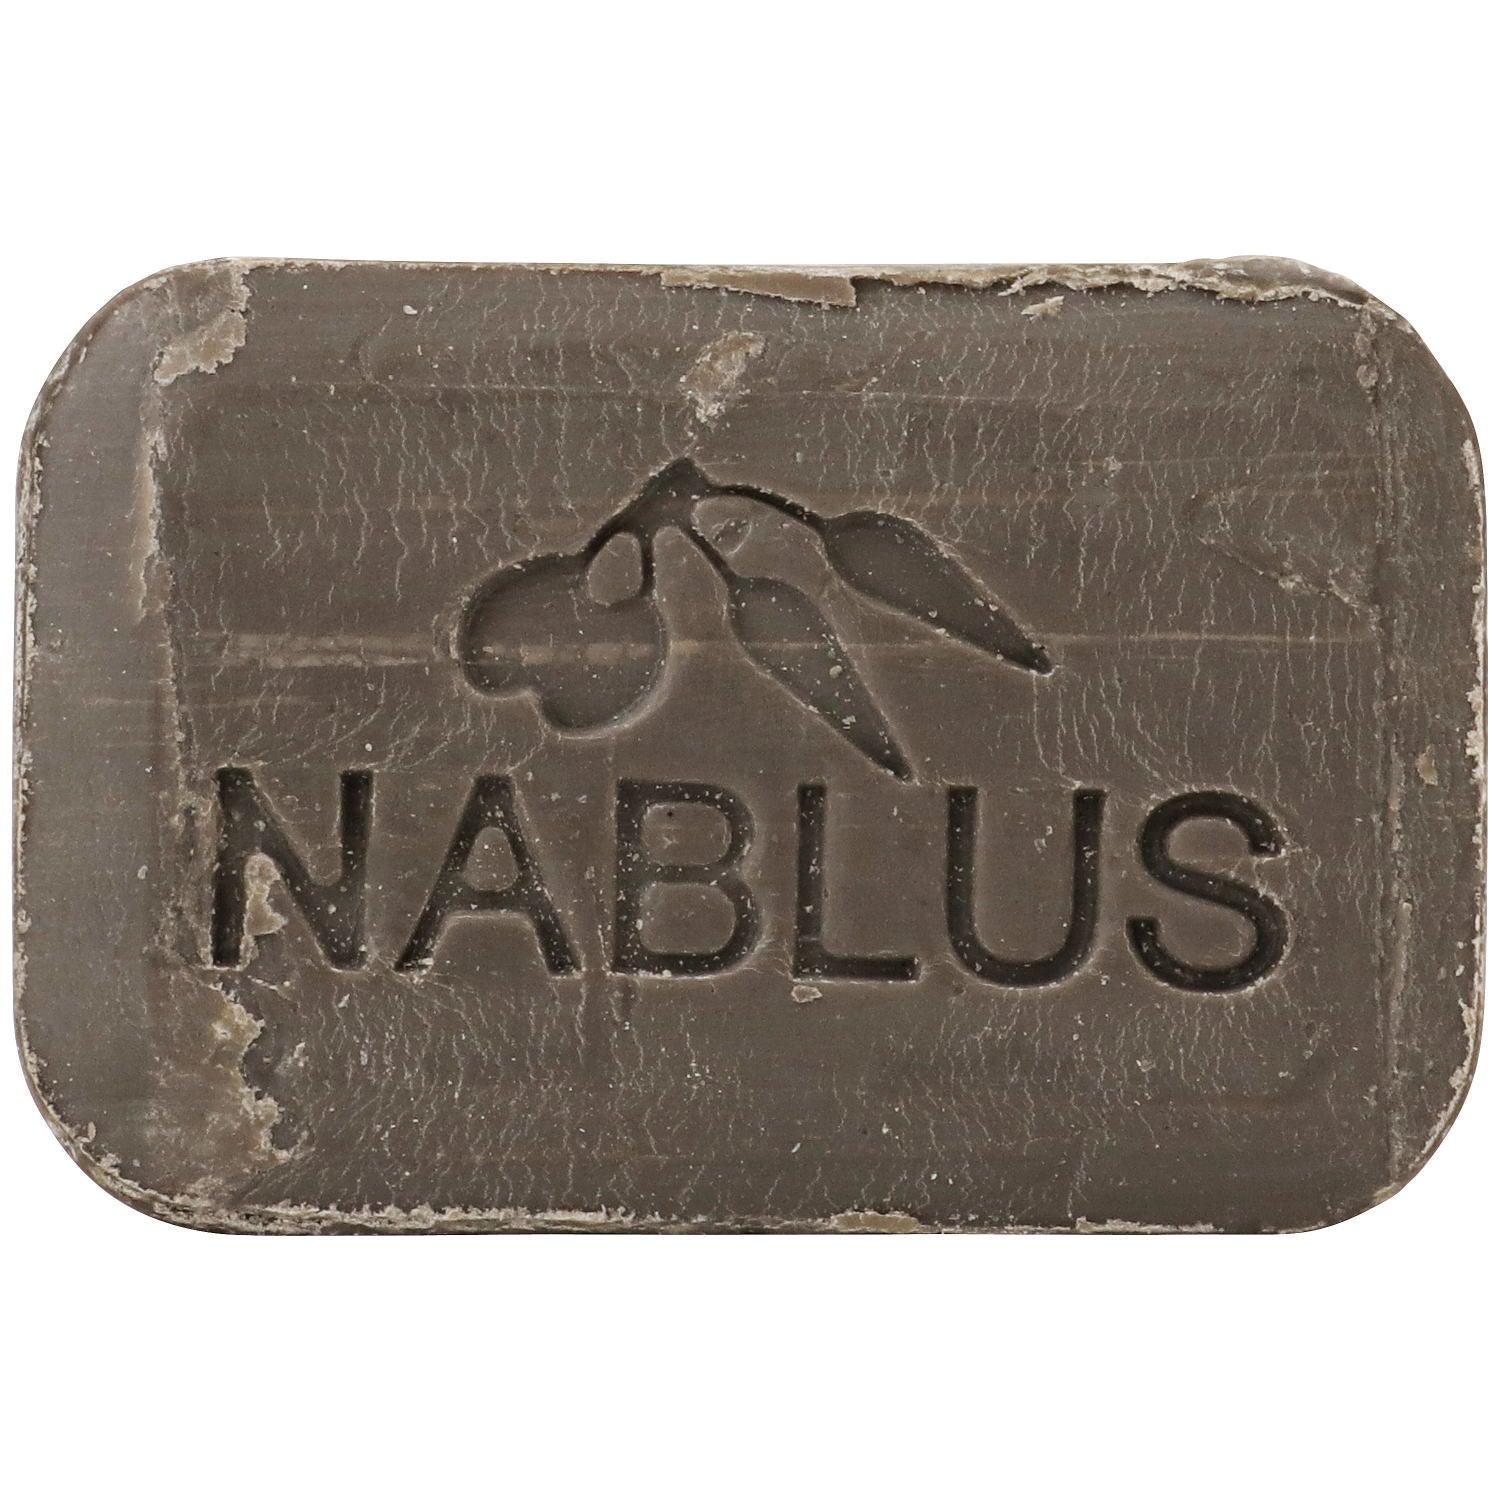 NABLUS SOAP ナーブルスソープ 無添加 完全オーガニック石鹸（死海の泥）豊富なミネラル・毛穴すっきり 100g - YOUR ORGANICS